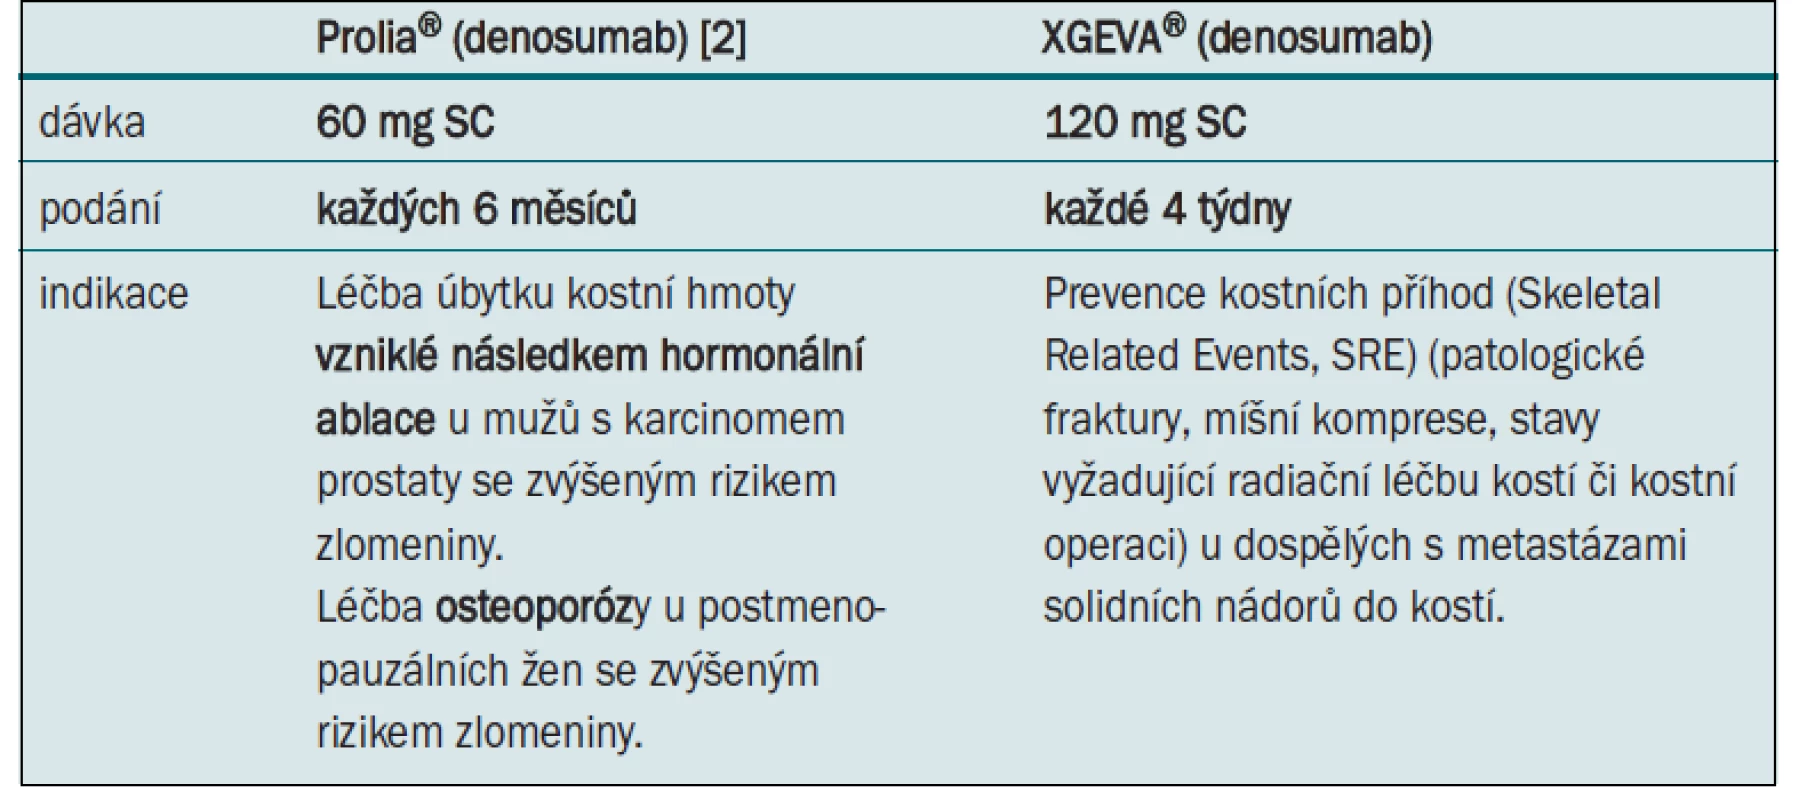 Indikace denosumabu schválené EMA (European Medicines Agency).